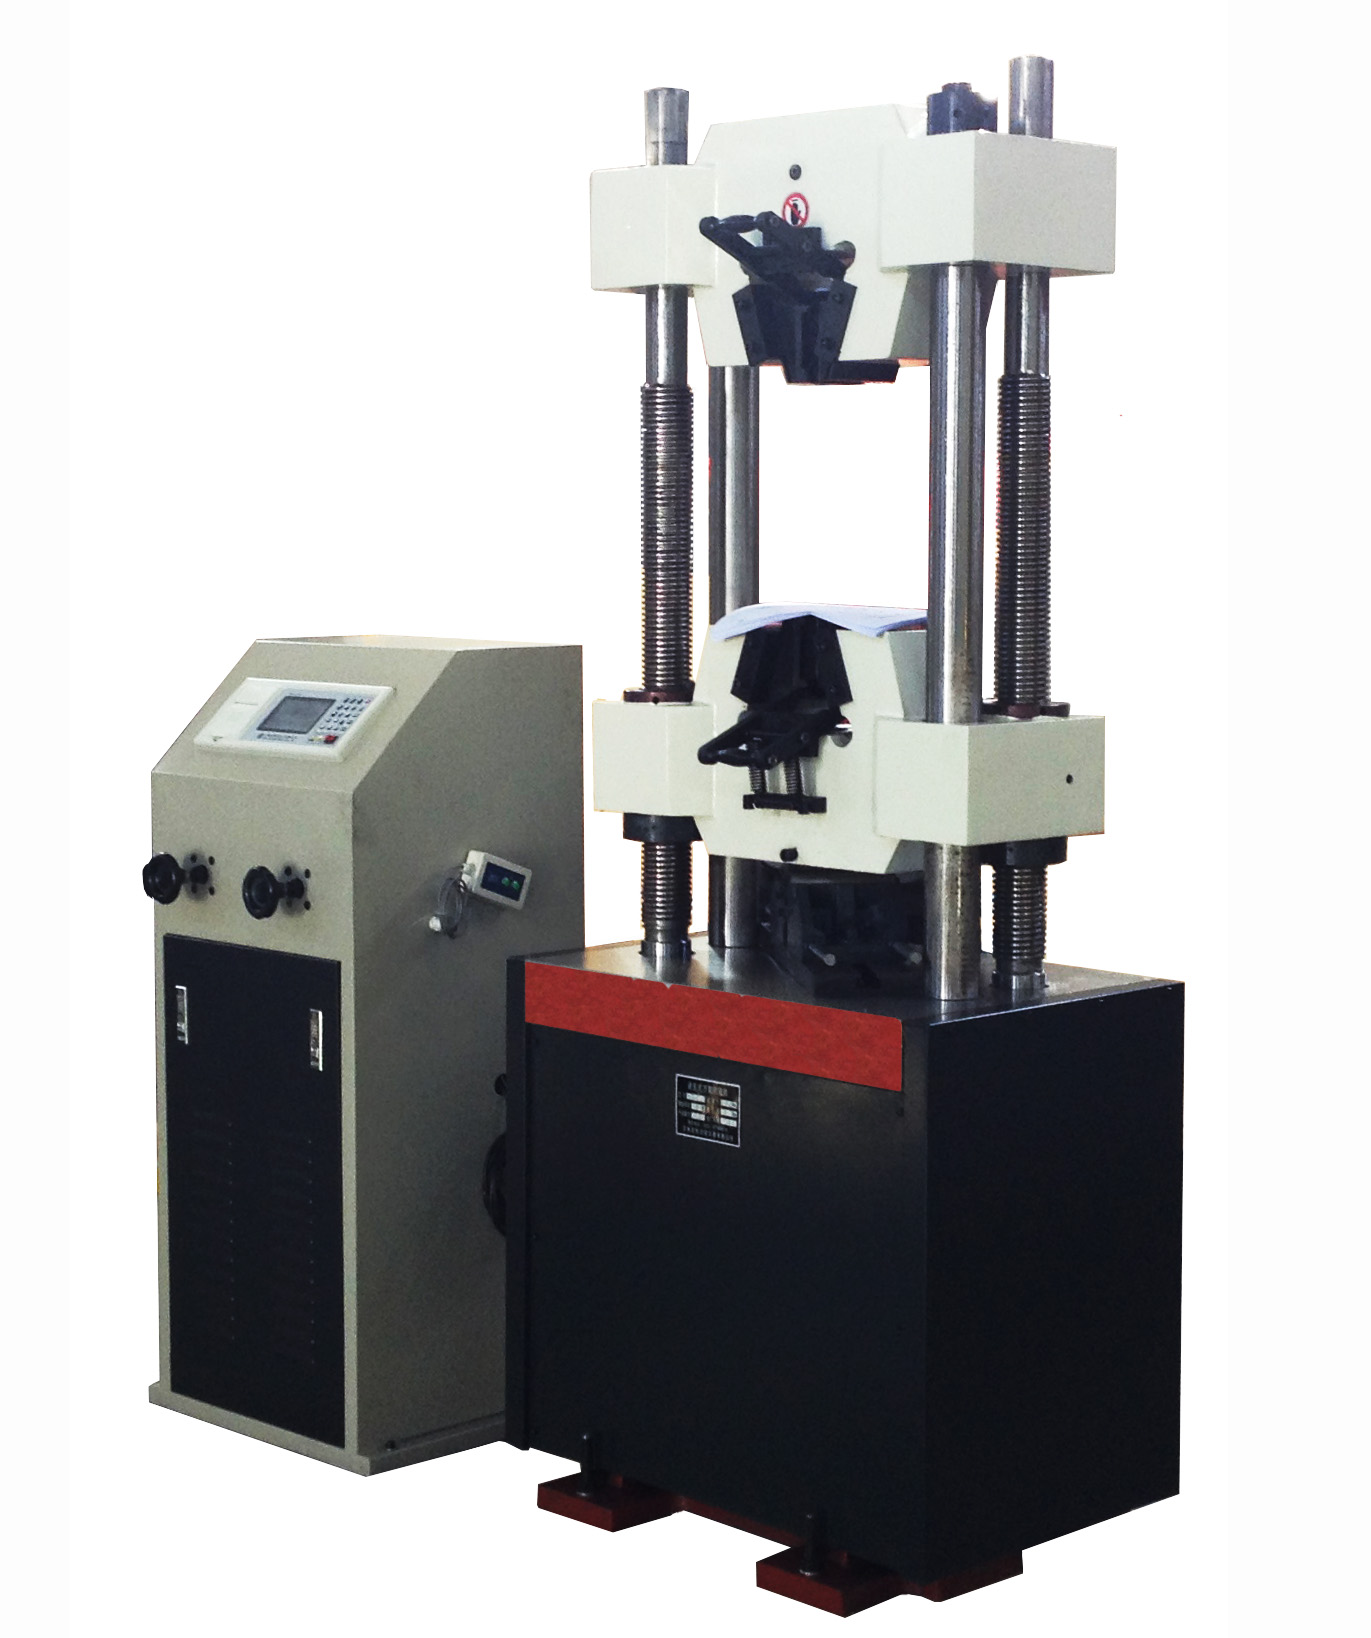 TES-300B liquid crystal digital display hydraulic universal testing machine